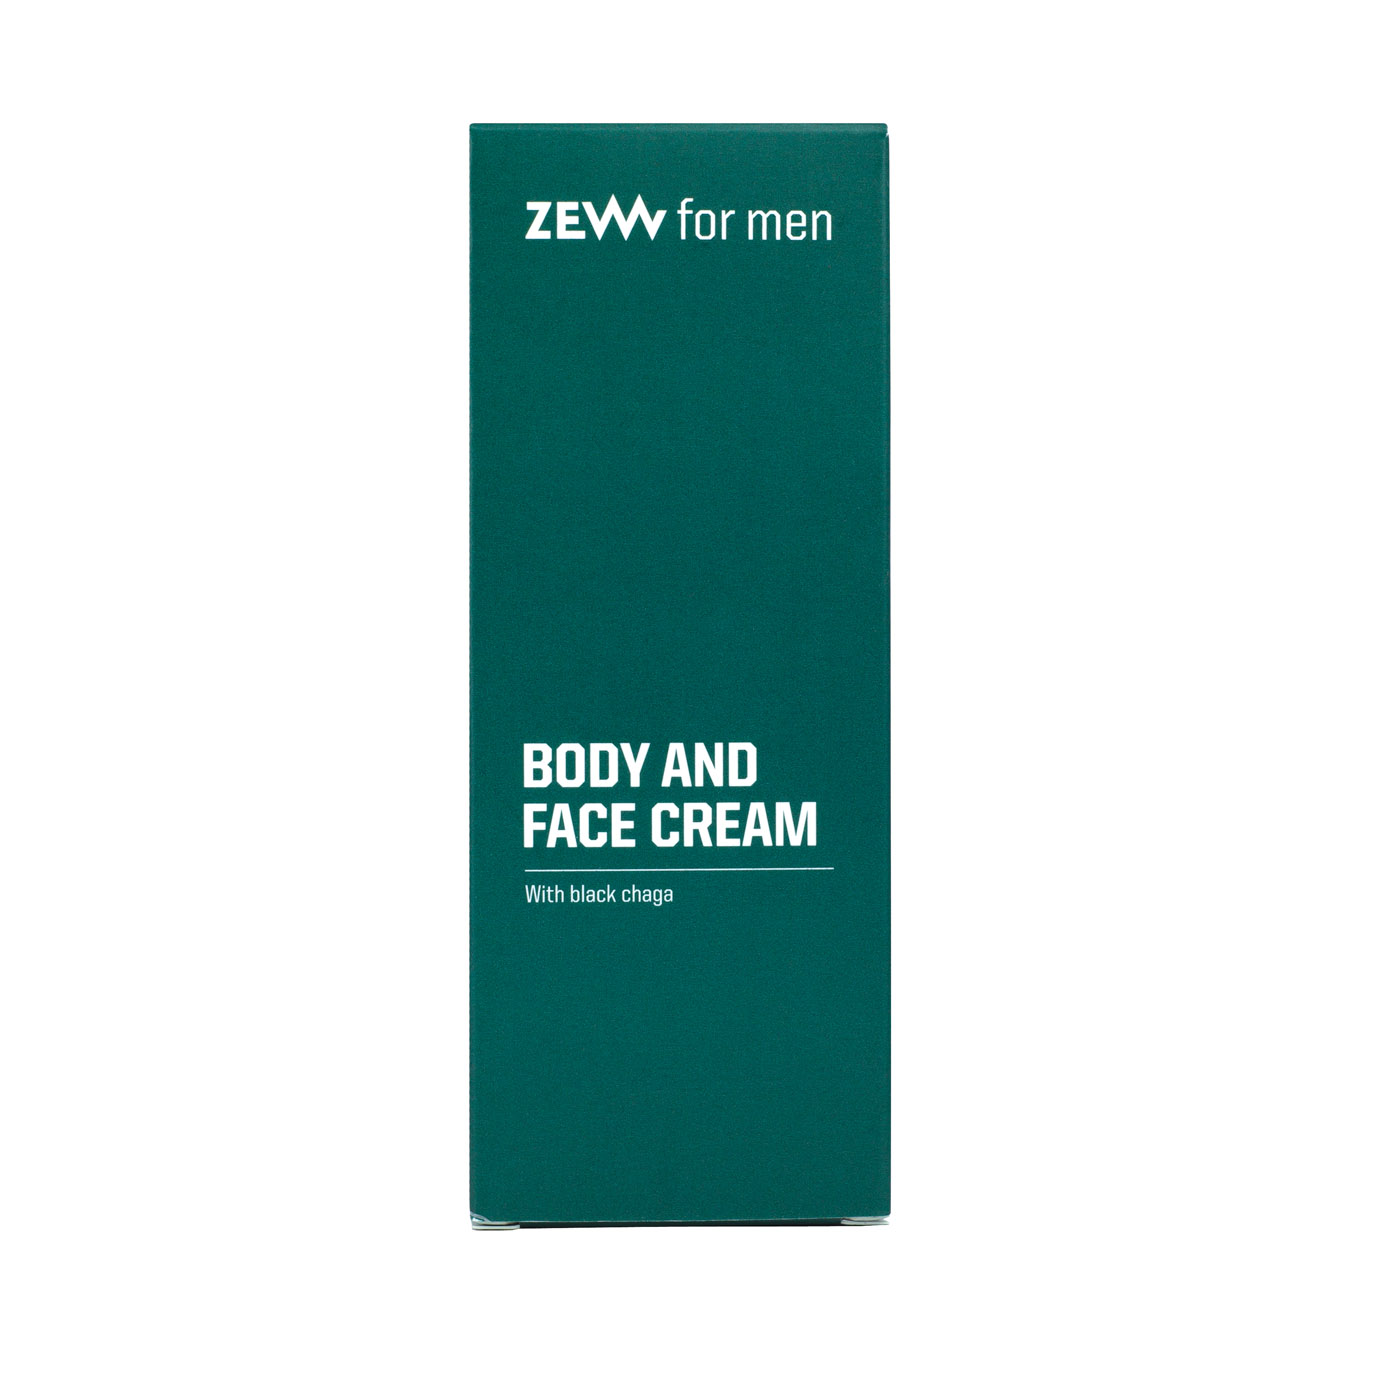 ZEW for men Face and Body Cream - krém na obličej a tělo s houbou chaga, 80 ml